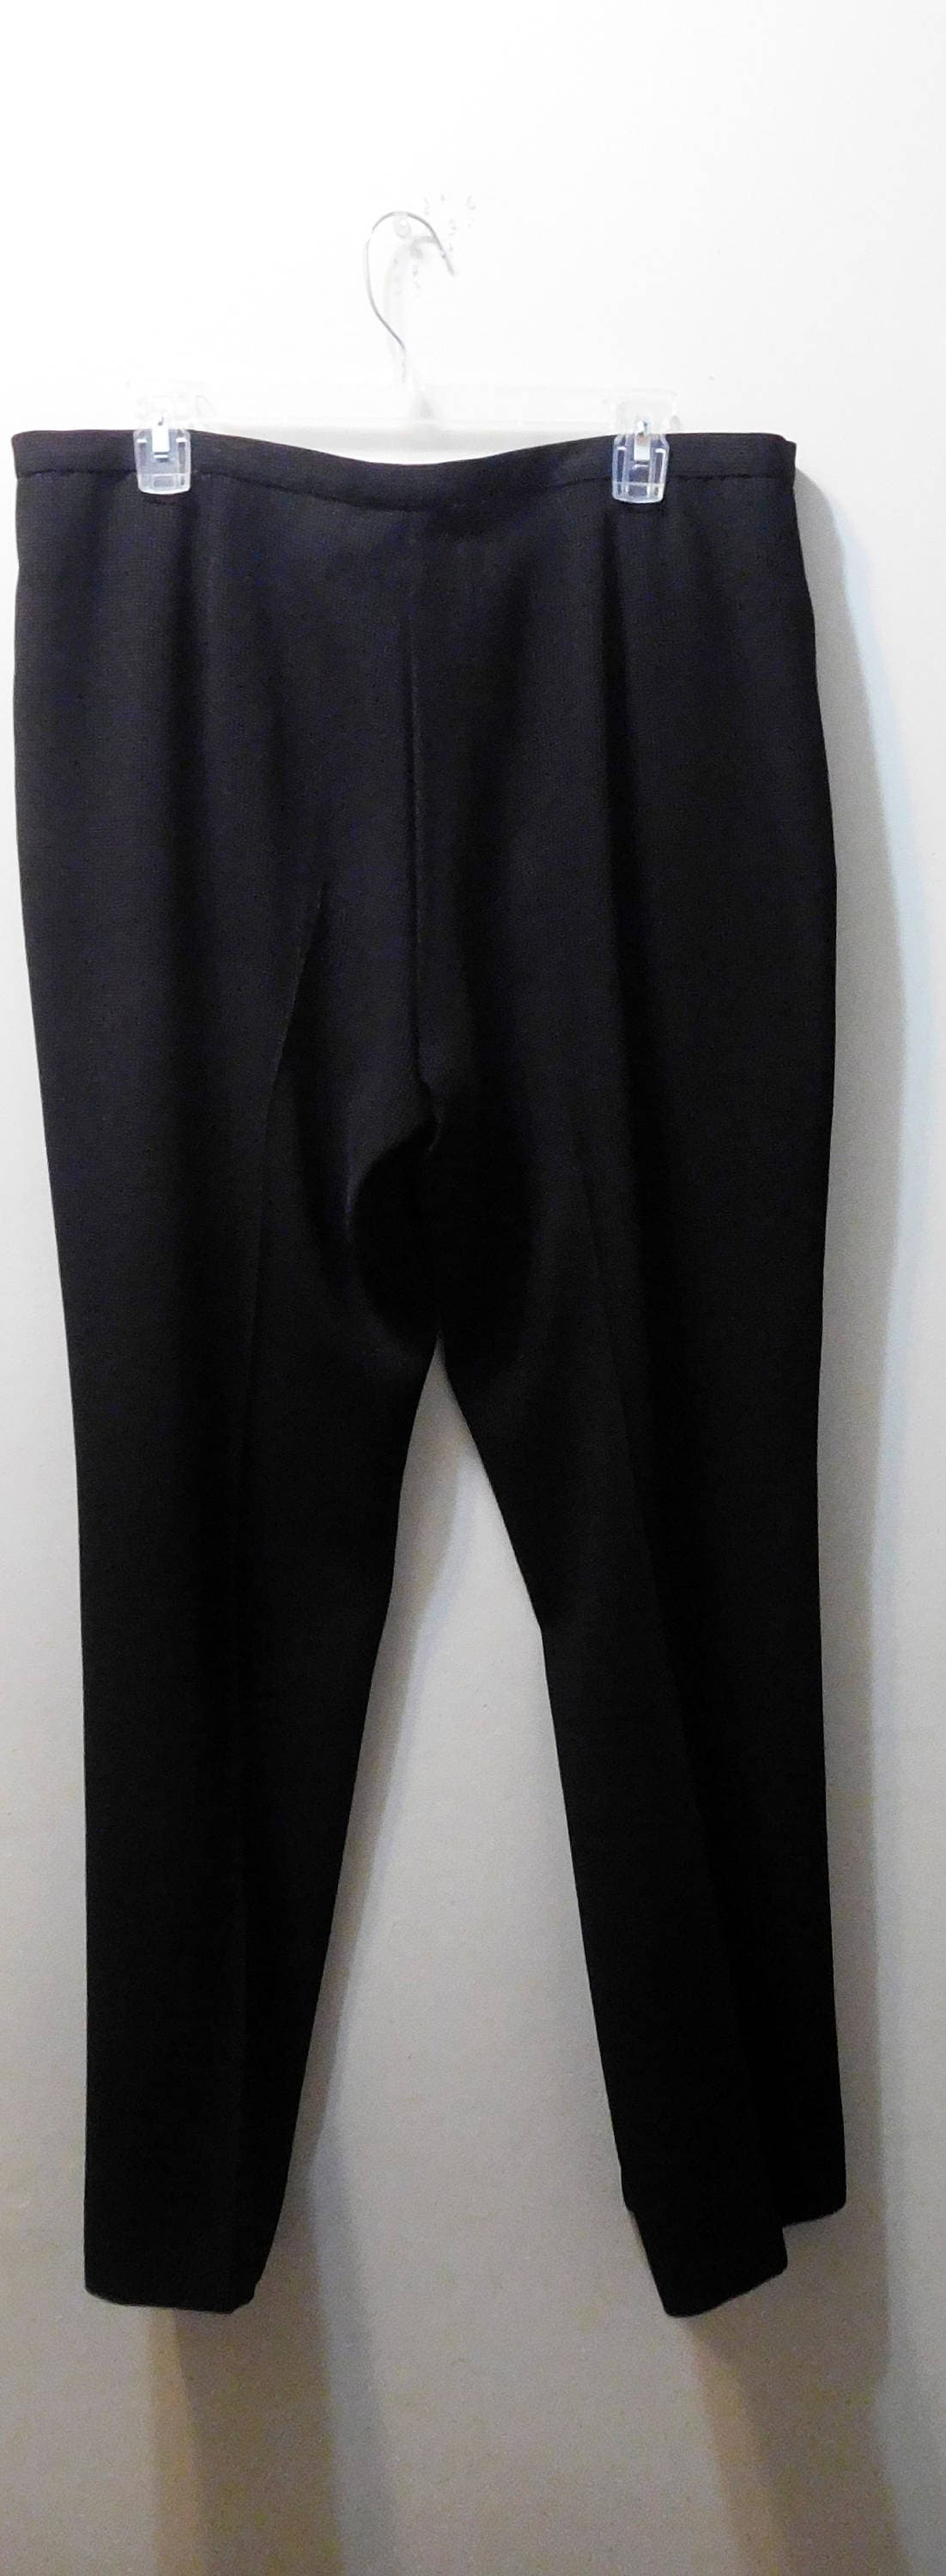 Vane-b Paris Vintage Women's Dress Pants Size 50US 16 Polyester